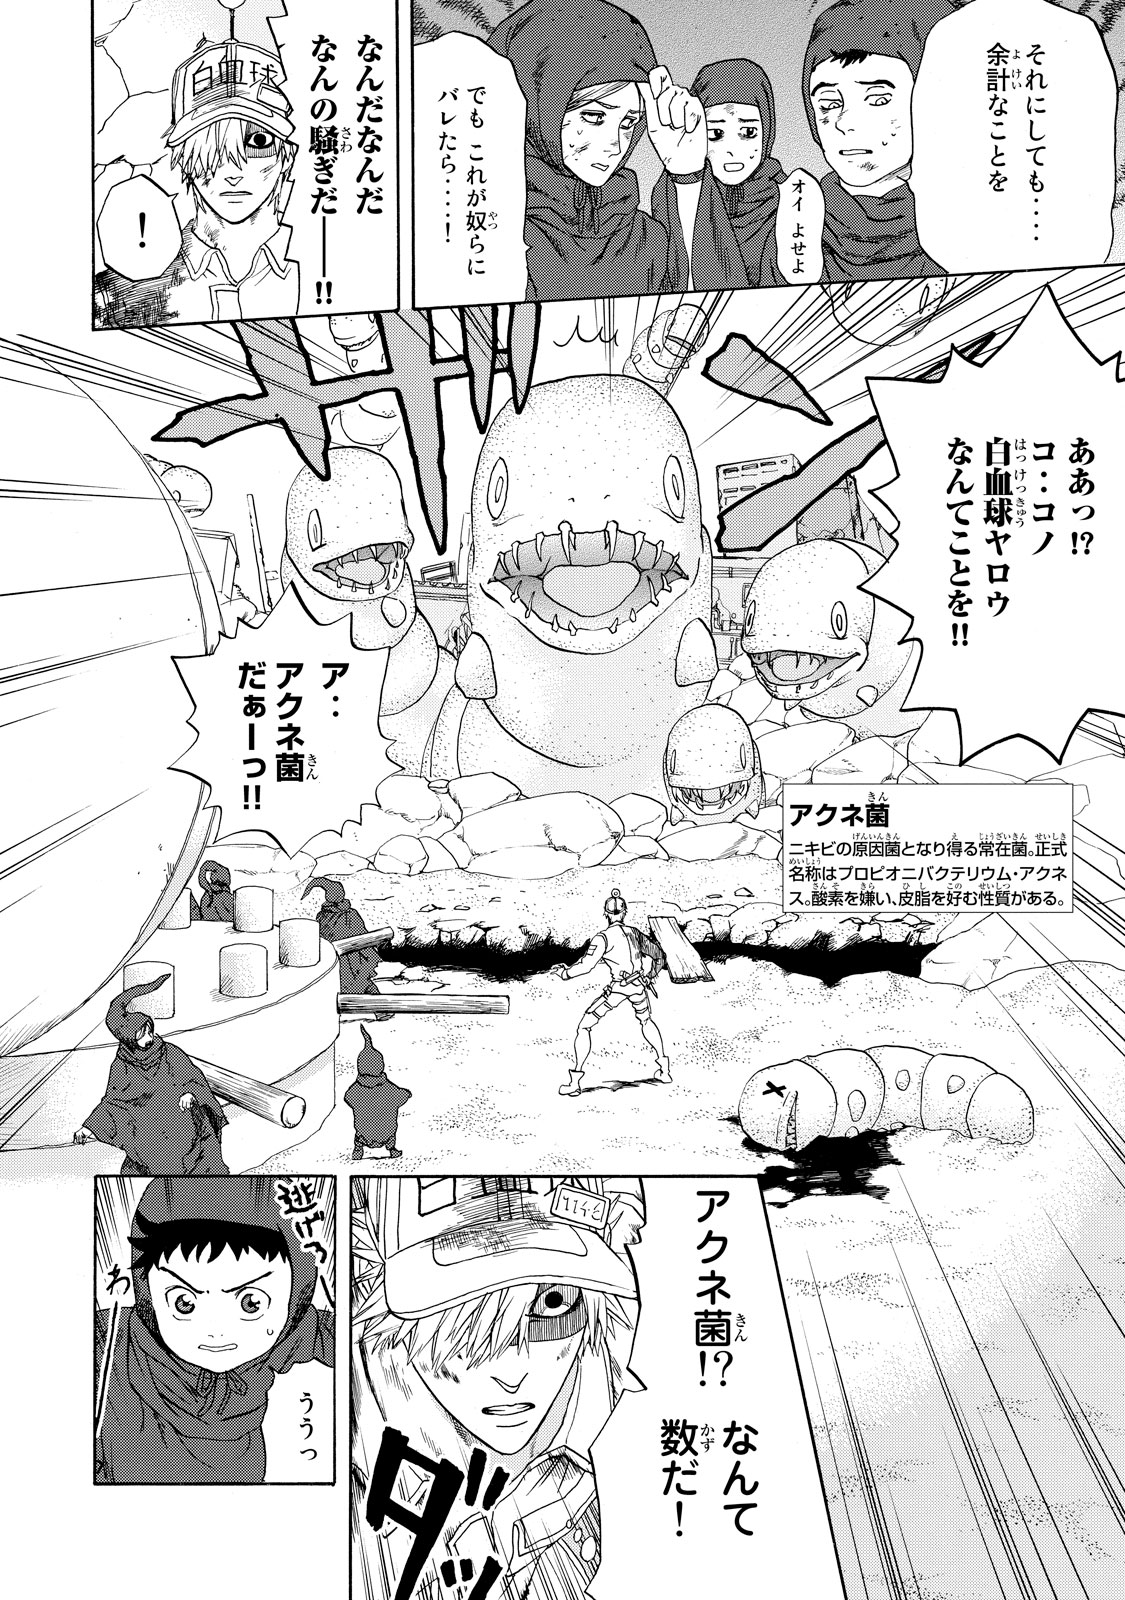 Hataraku Saibou - Chapter 14 - Page 6